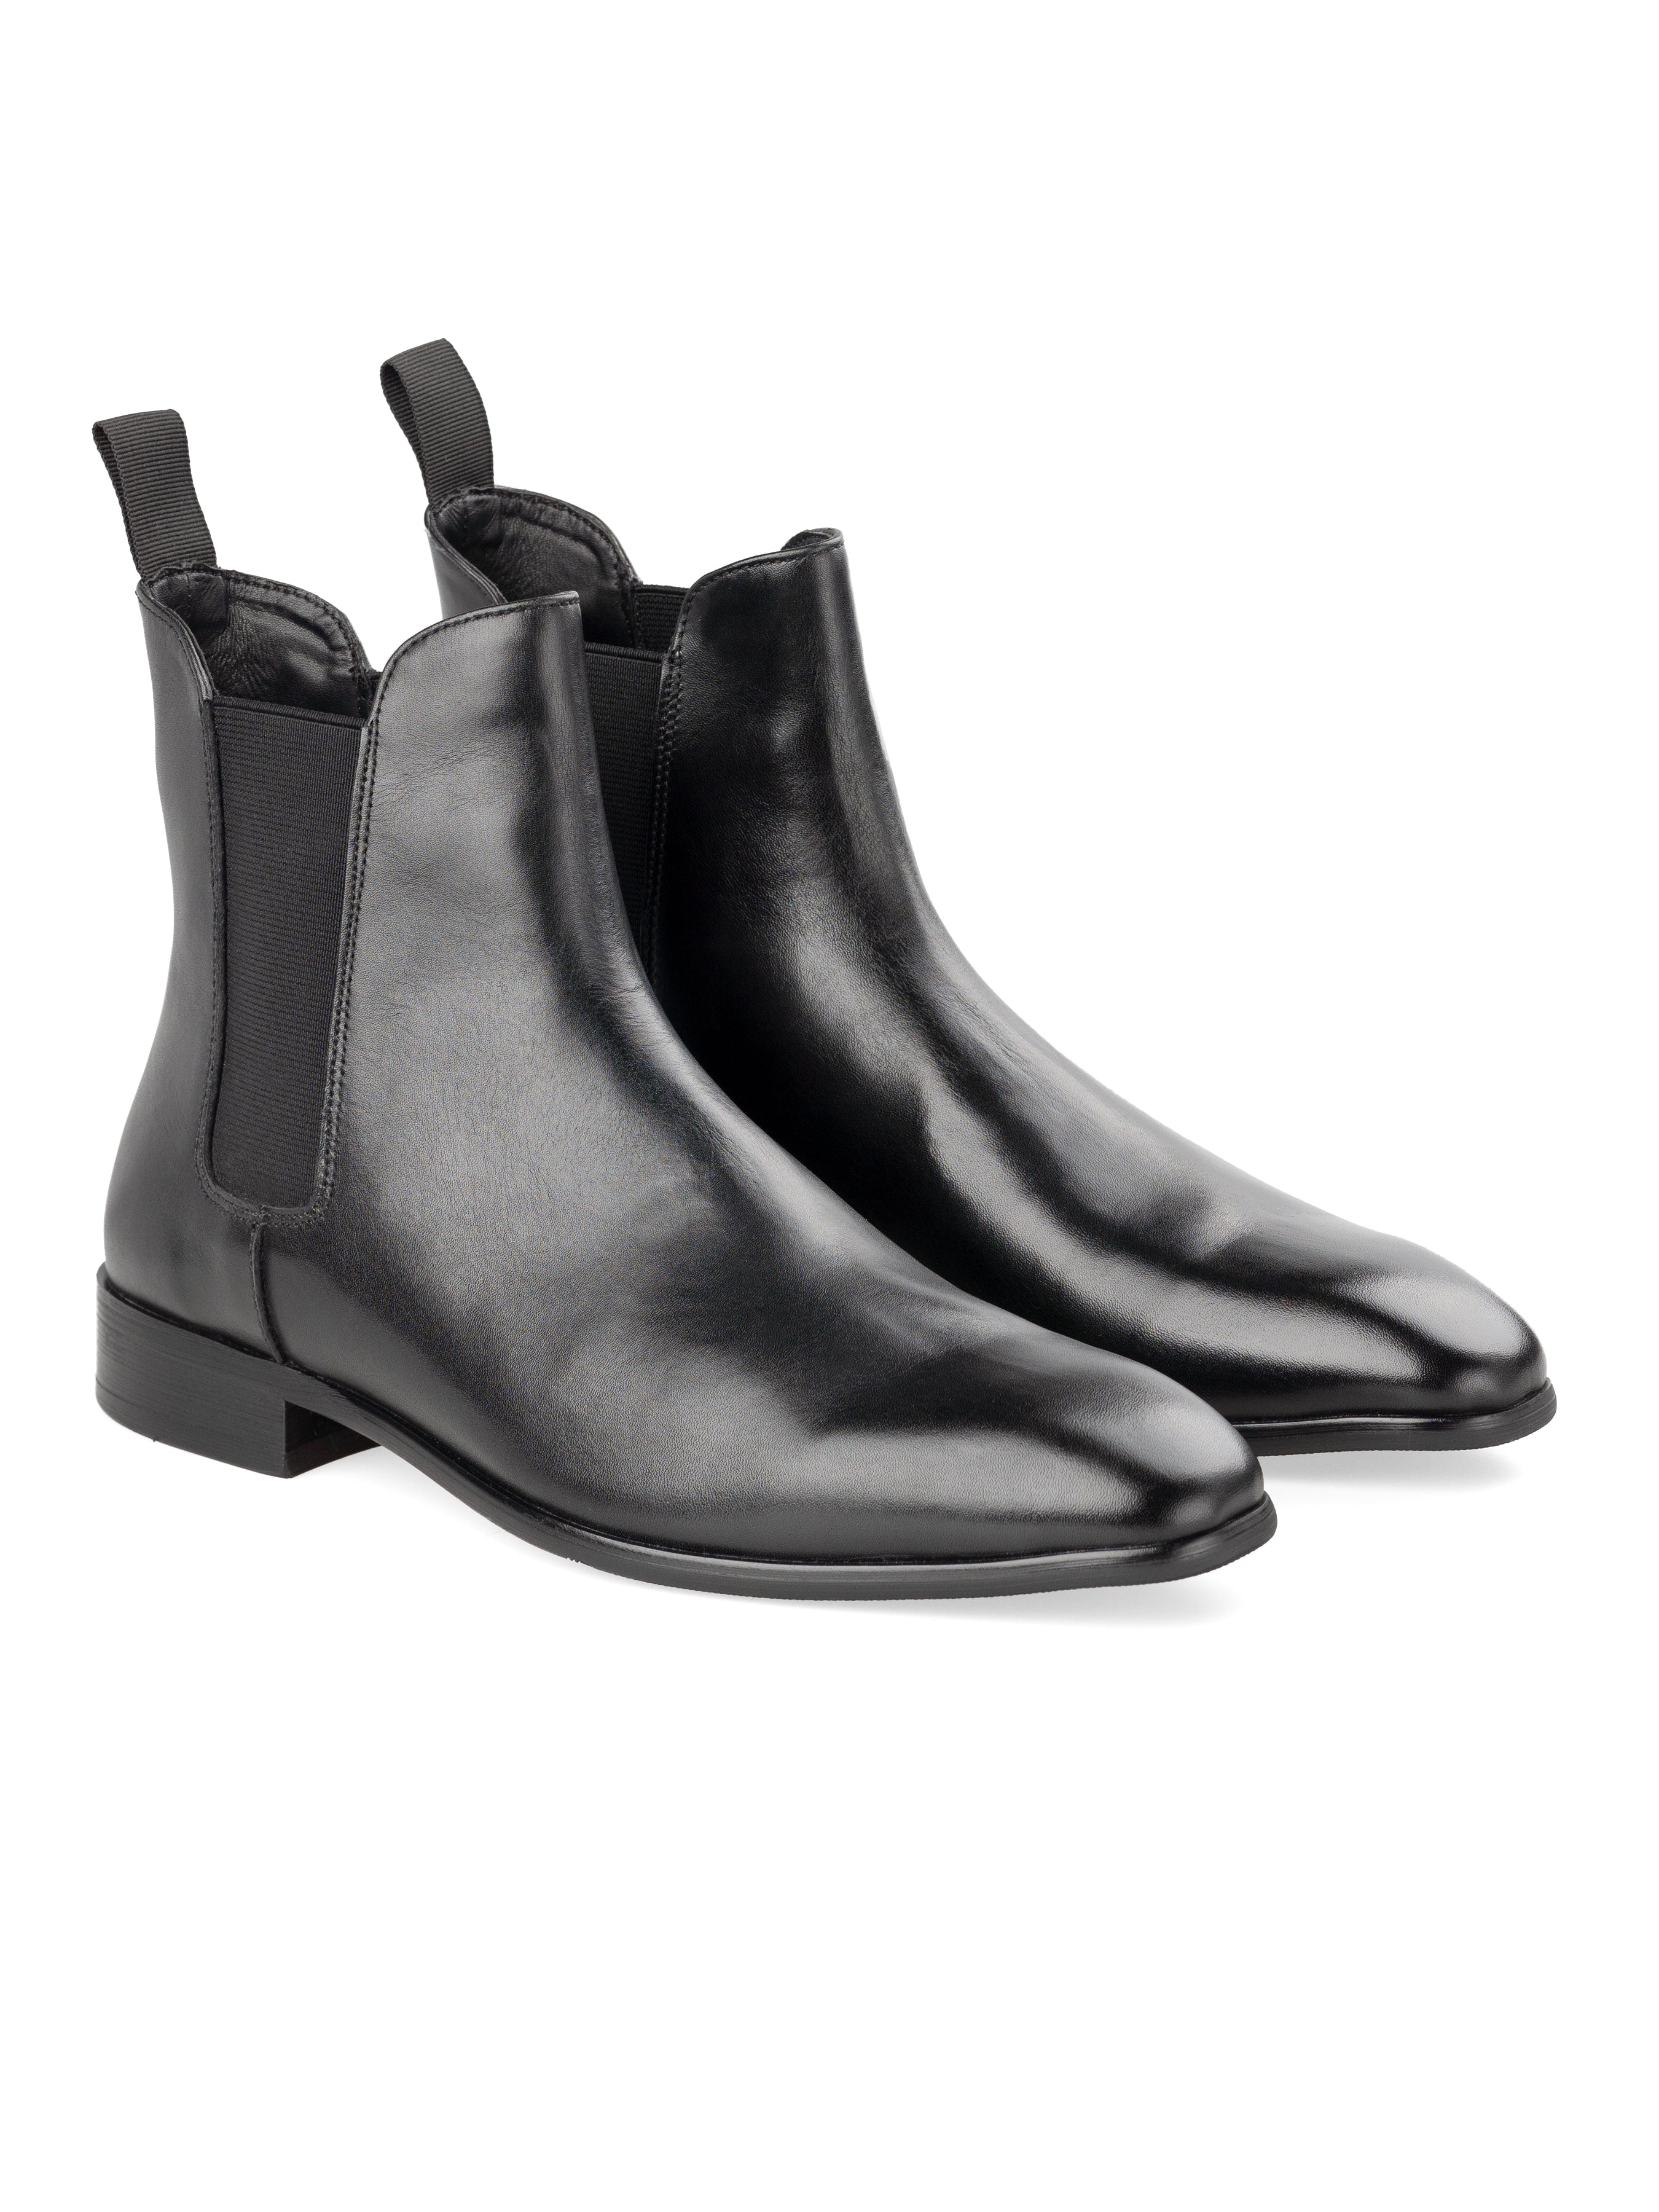 Louis Chelsea Boots - Solid Black Leather | Zeve Shoes